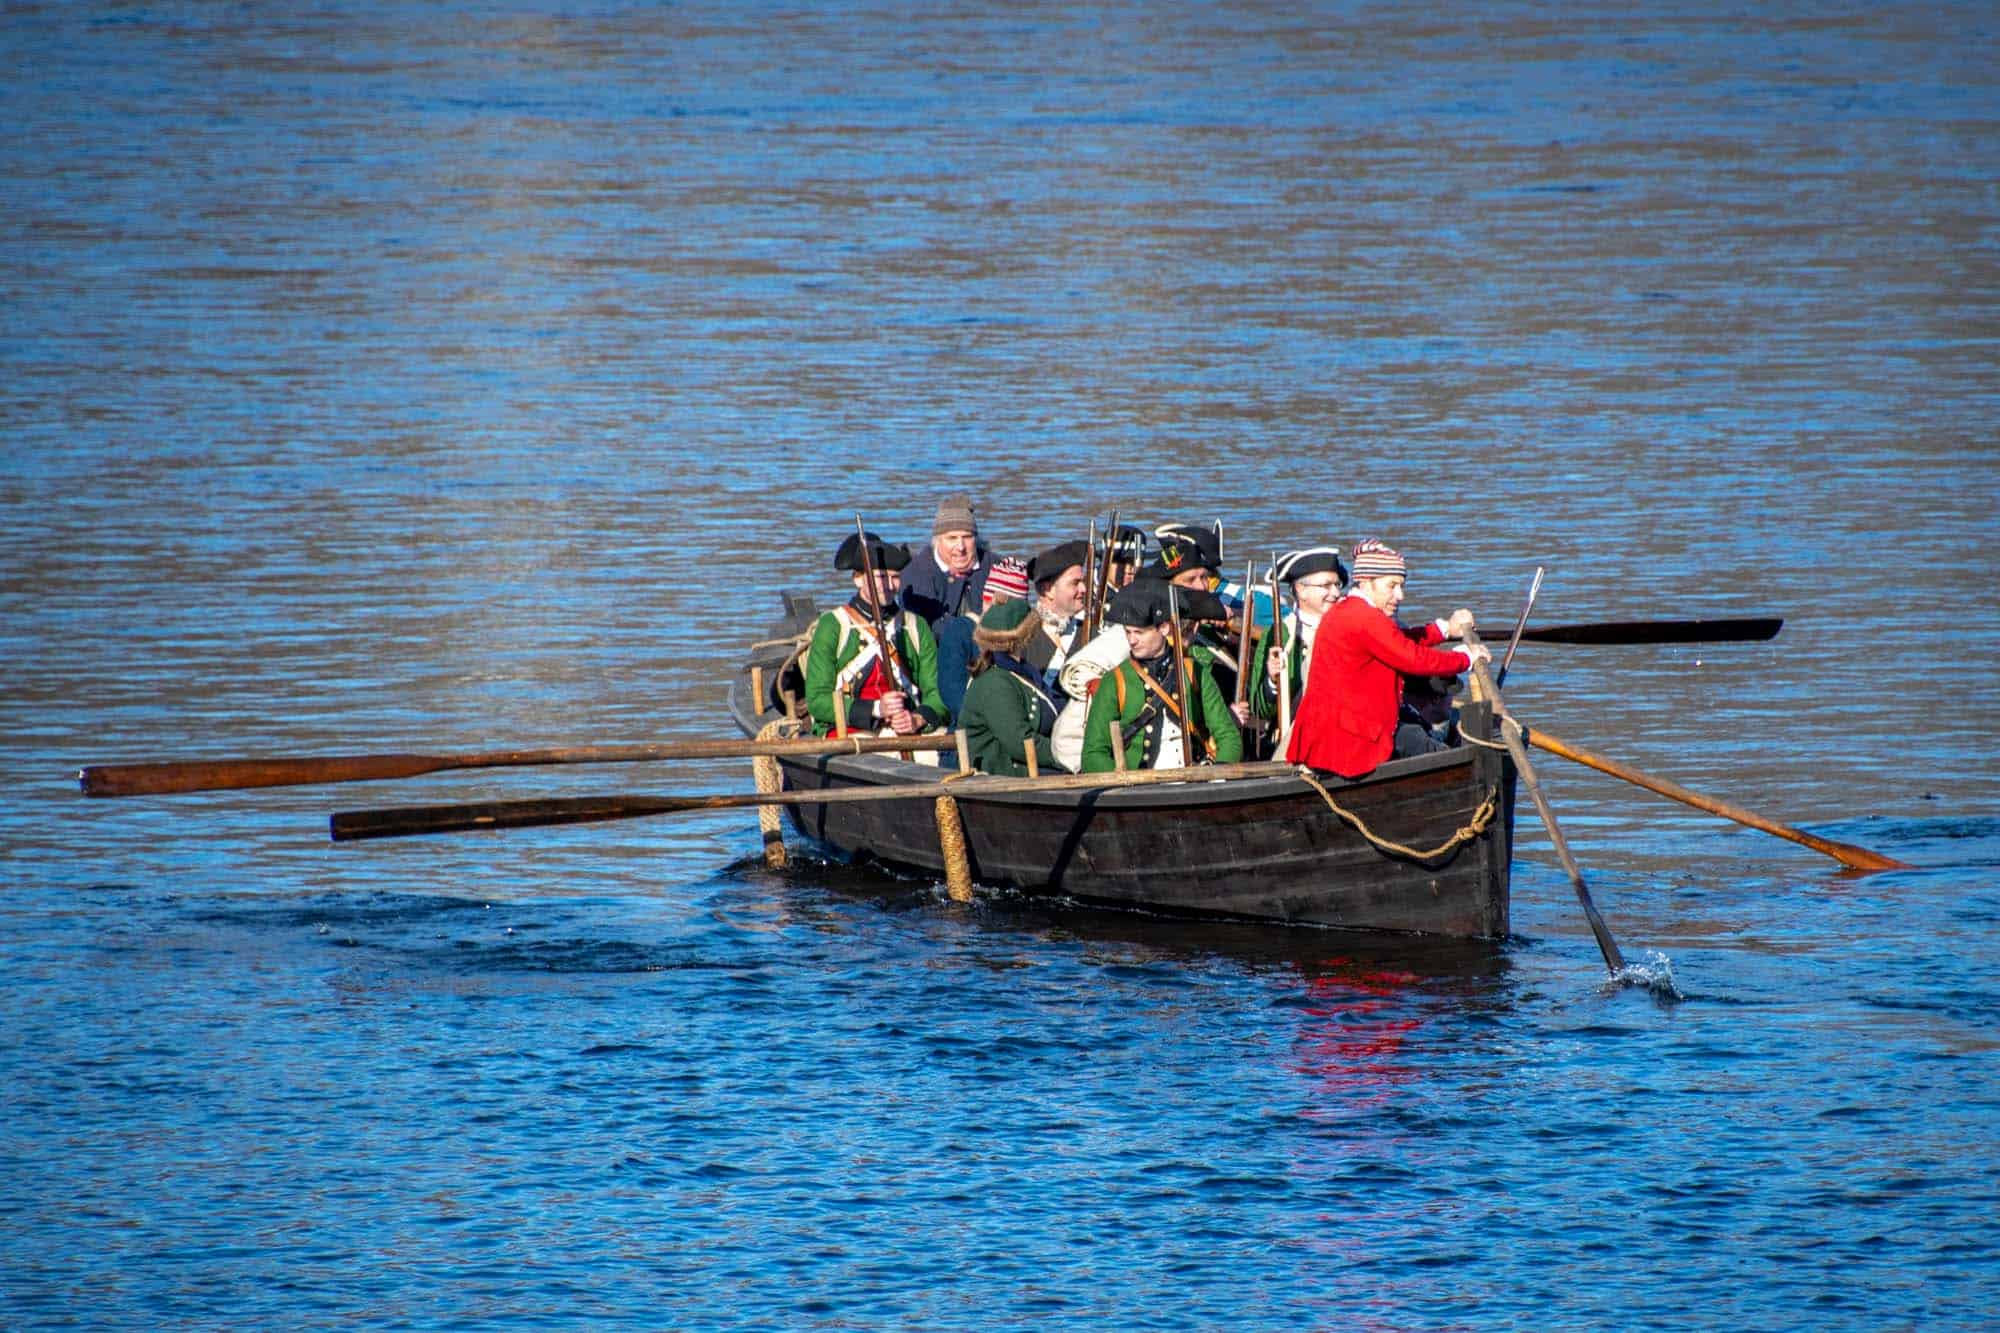 Reenactors in Revolutionary era dress rowing a wooden boat across the Delaware River.